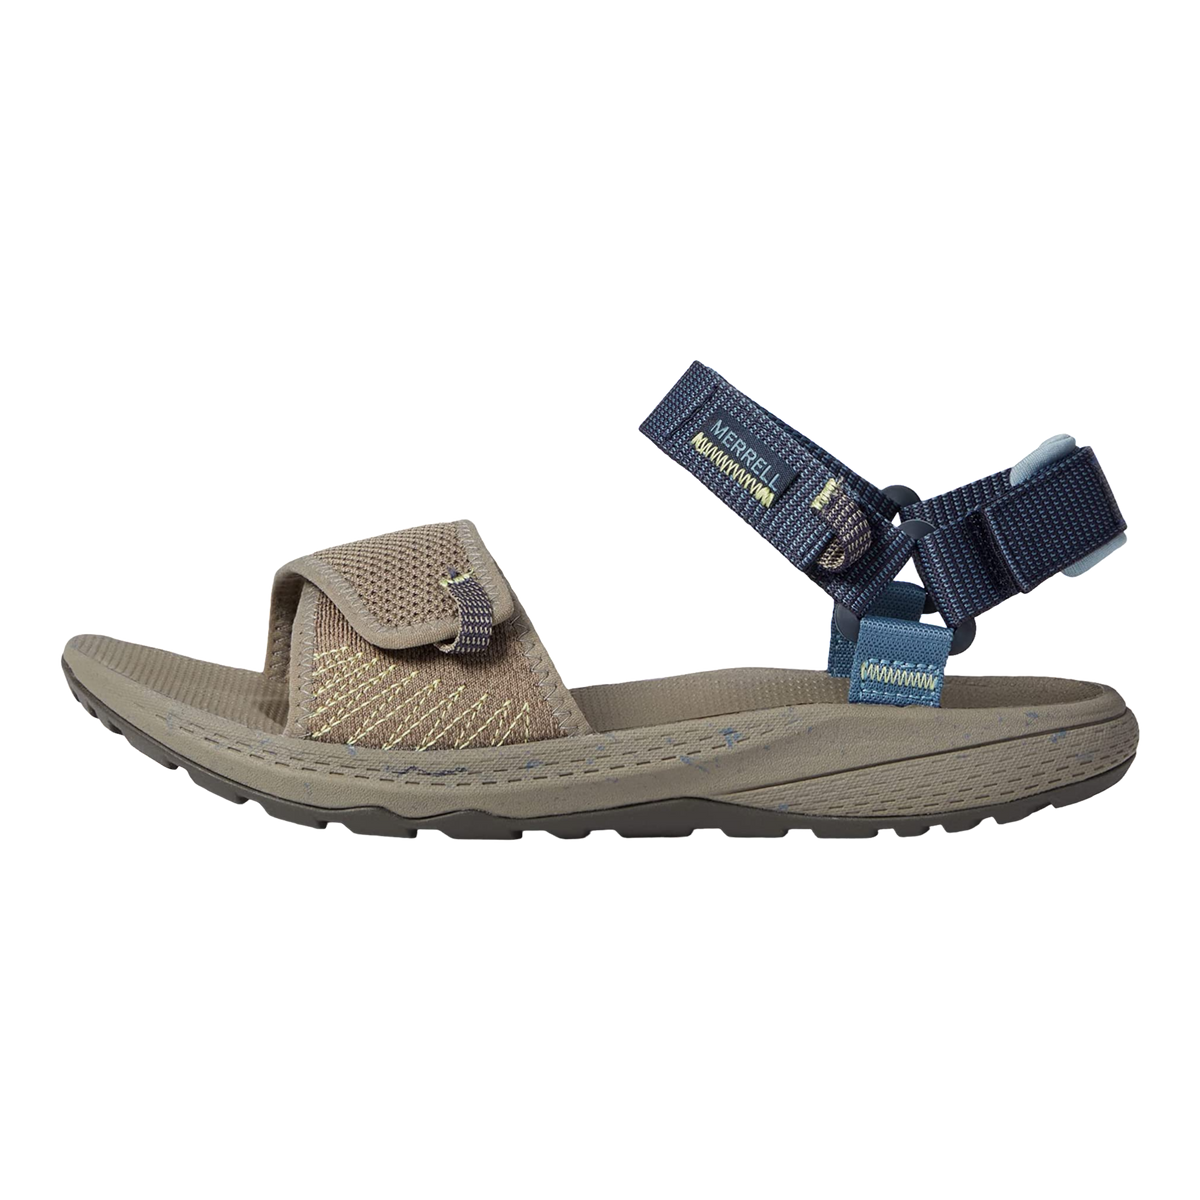 Merrell Women's Bravada Backstrap Sandals - Brindle/Navy